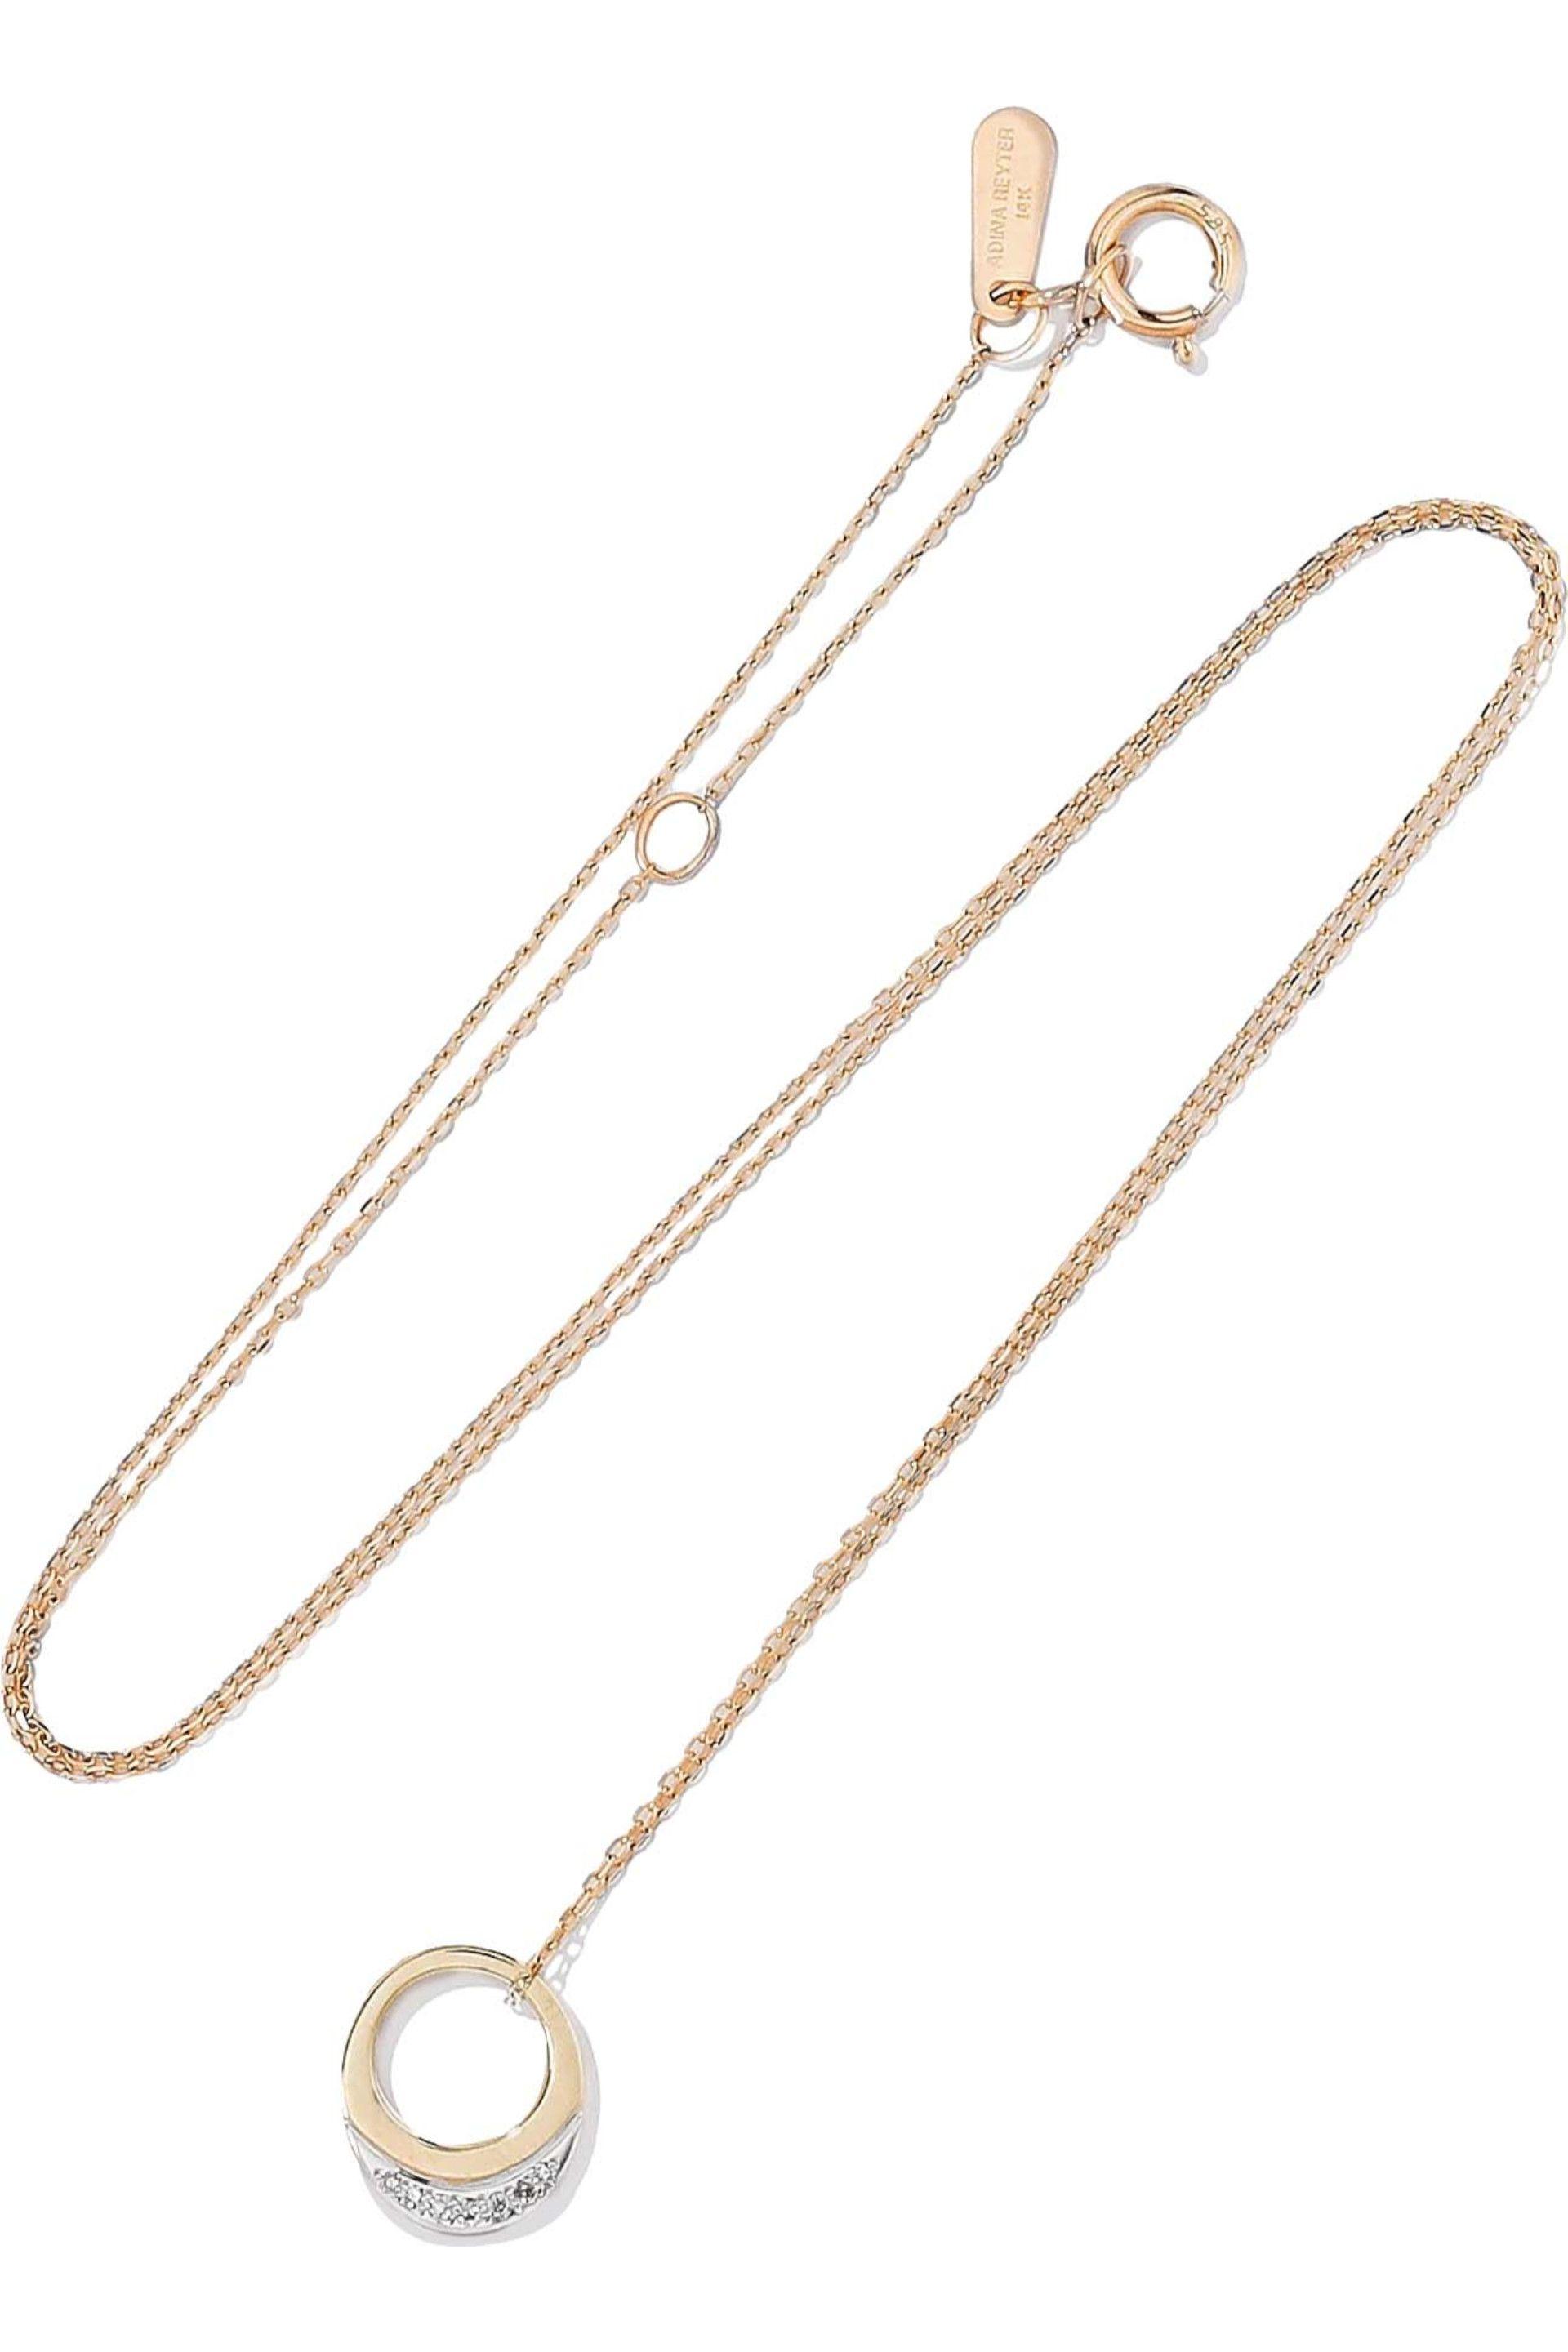 Adina Reyter 14-karat Gold Diamond Necklace Gold in Metallic - Lyst